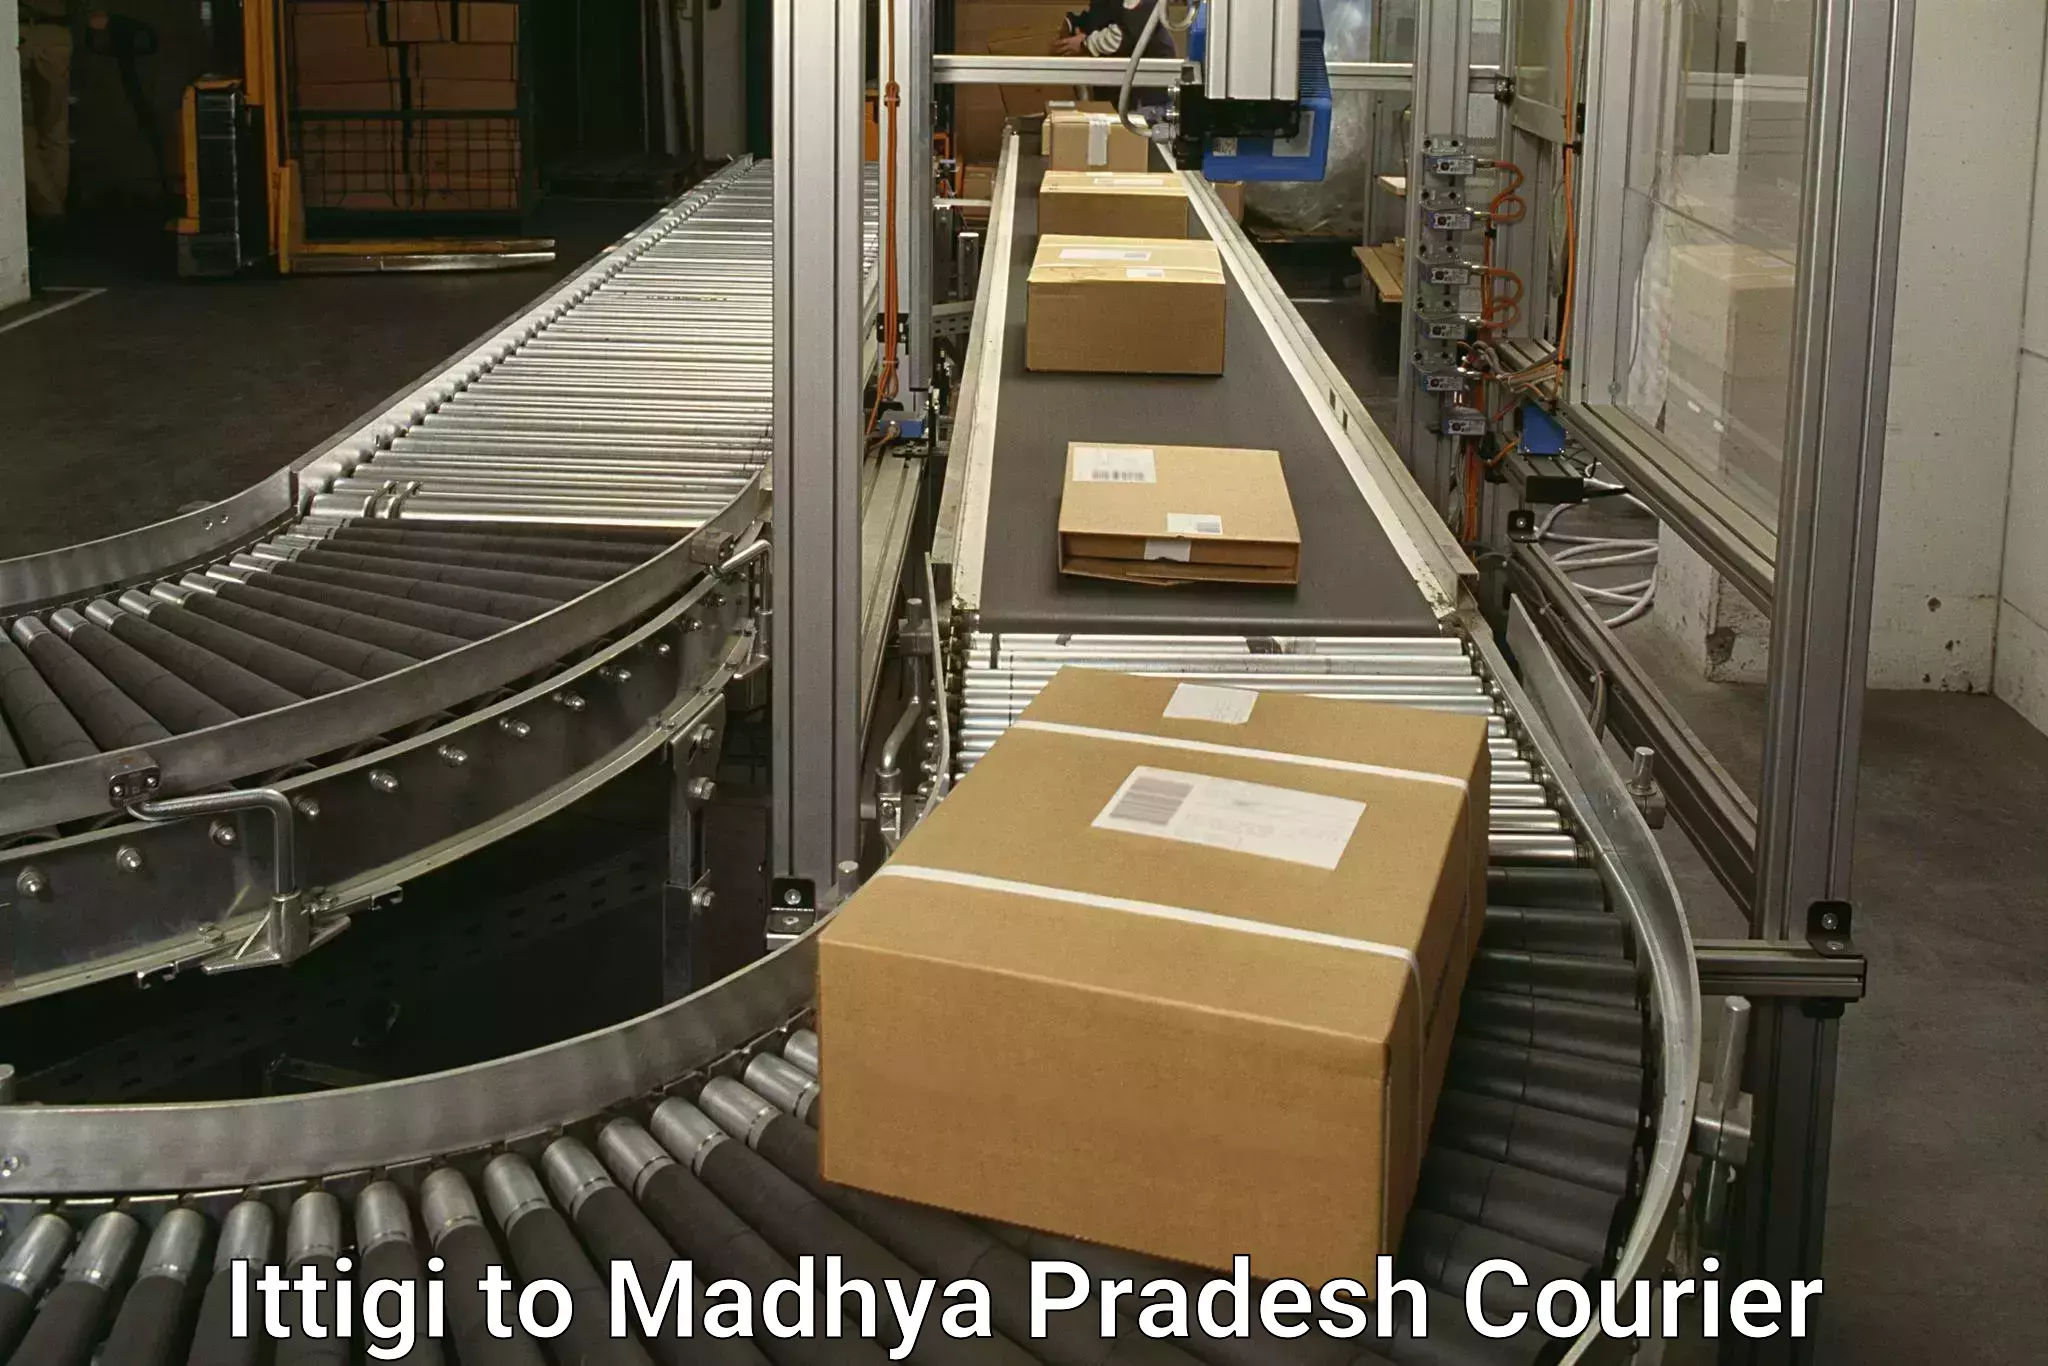 On-call courier service Ittigi to Madhya Pradesh